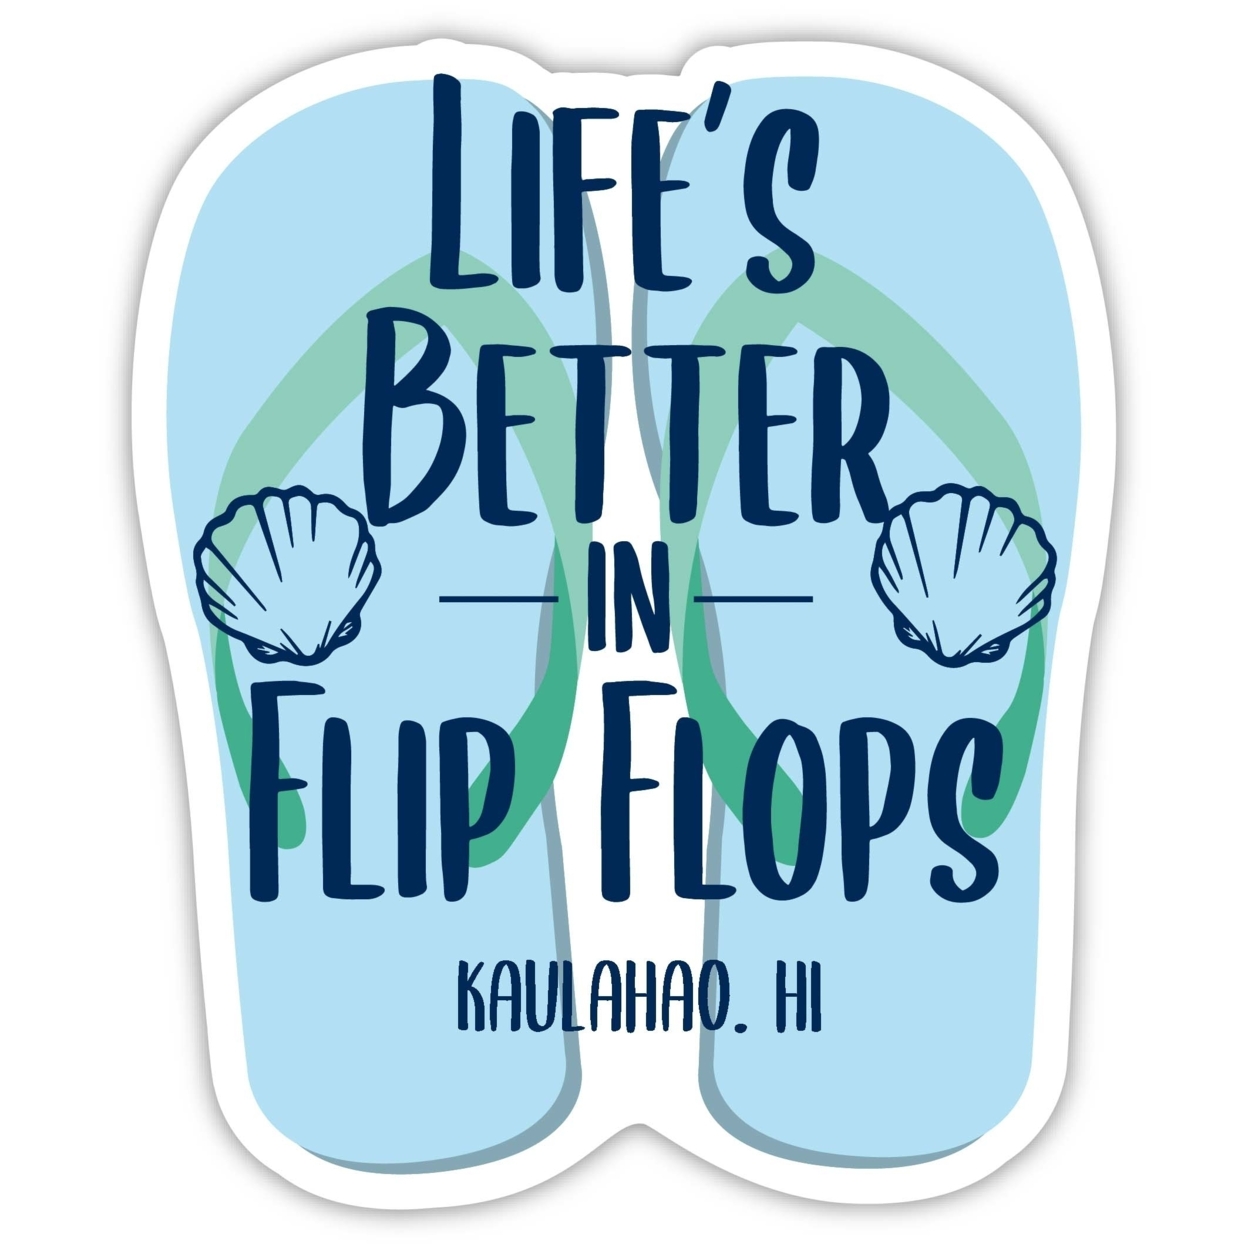 Kaulahao Hawaii Souvenir 4 Inch Vinyl Decal Sticker Flip Flop Design